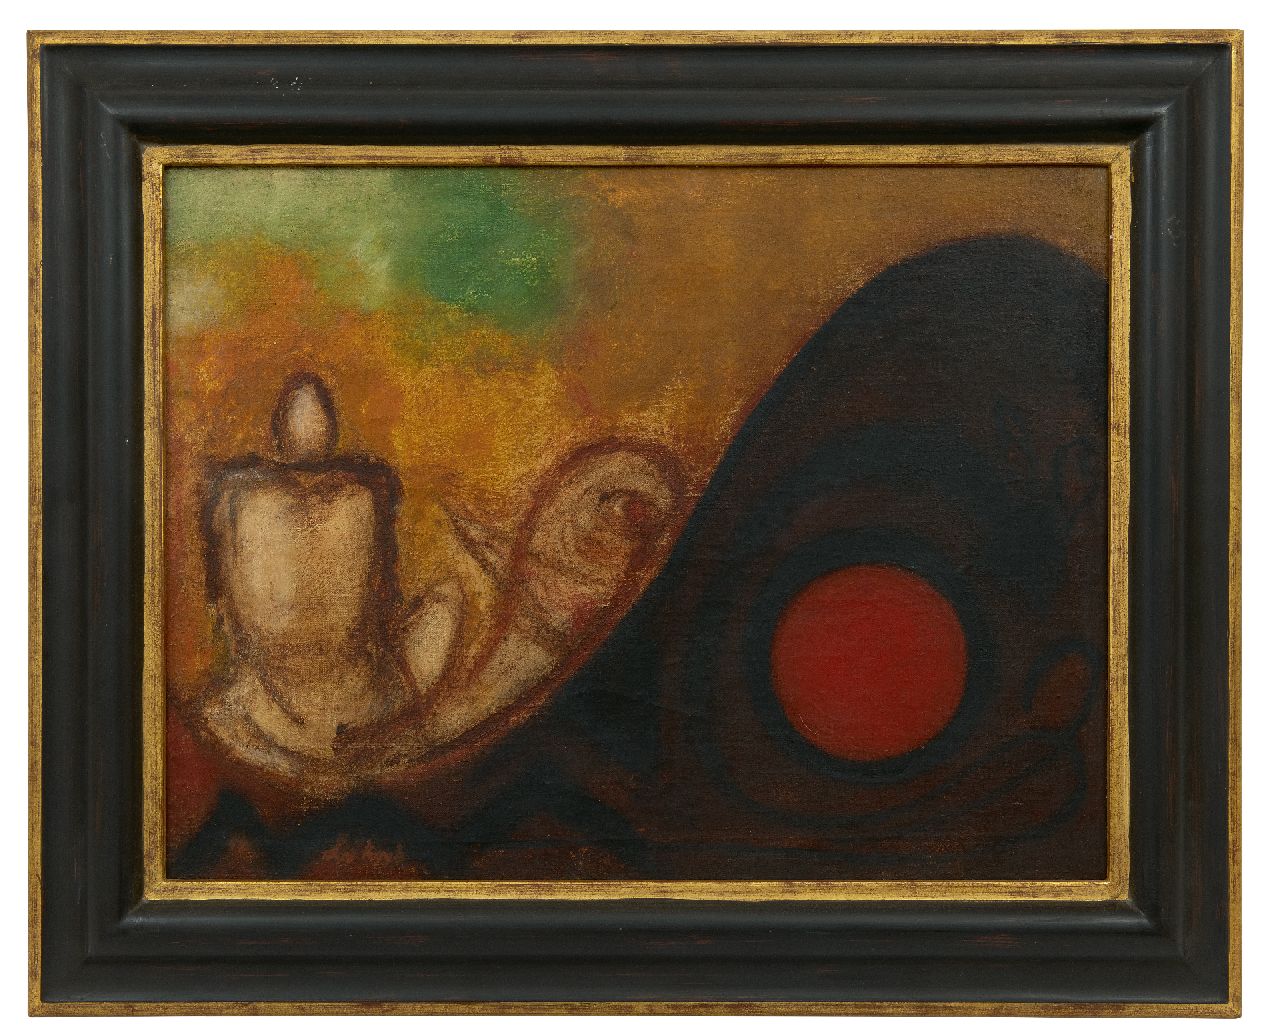 Kuik L. van | Laurens van Kuik | Paintings offered for sale | Composition, oil on canvas 46.1 x 60.2 cm, signed l.l.